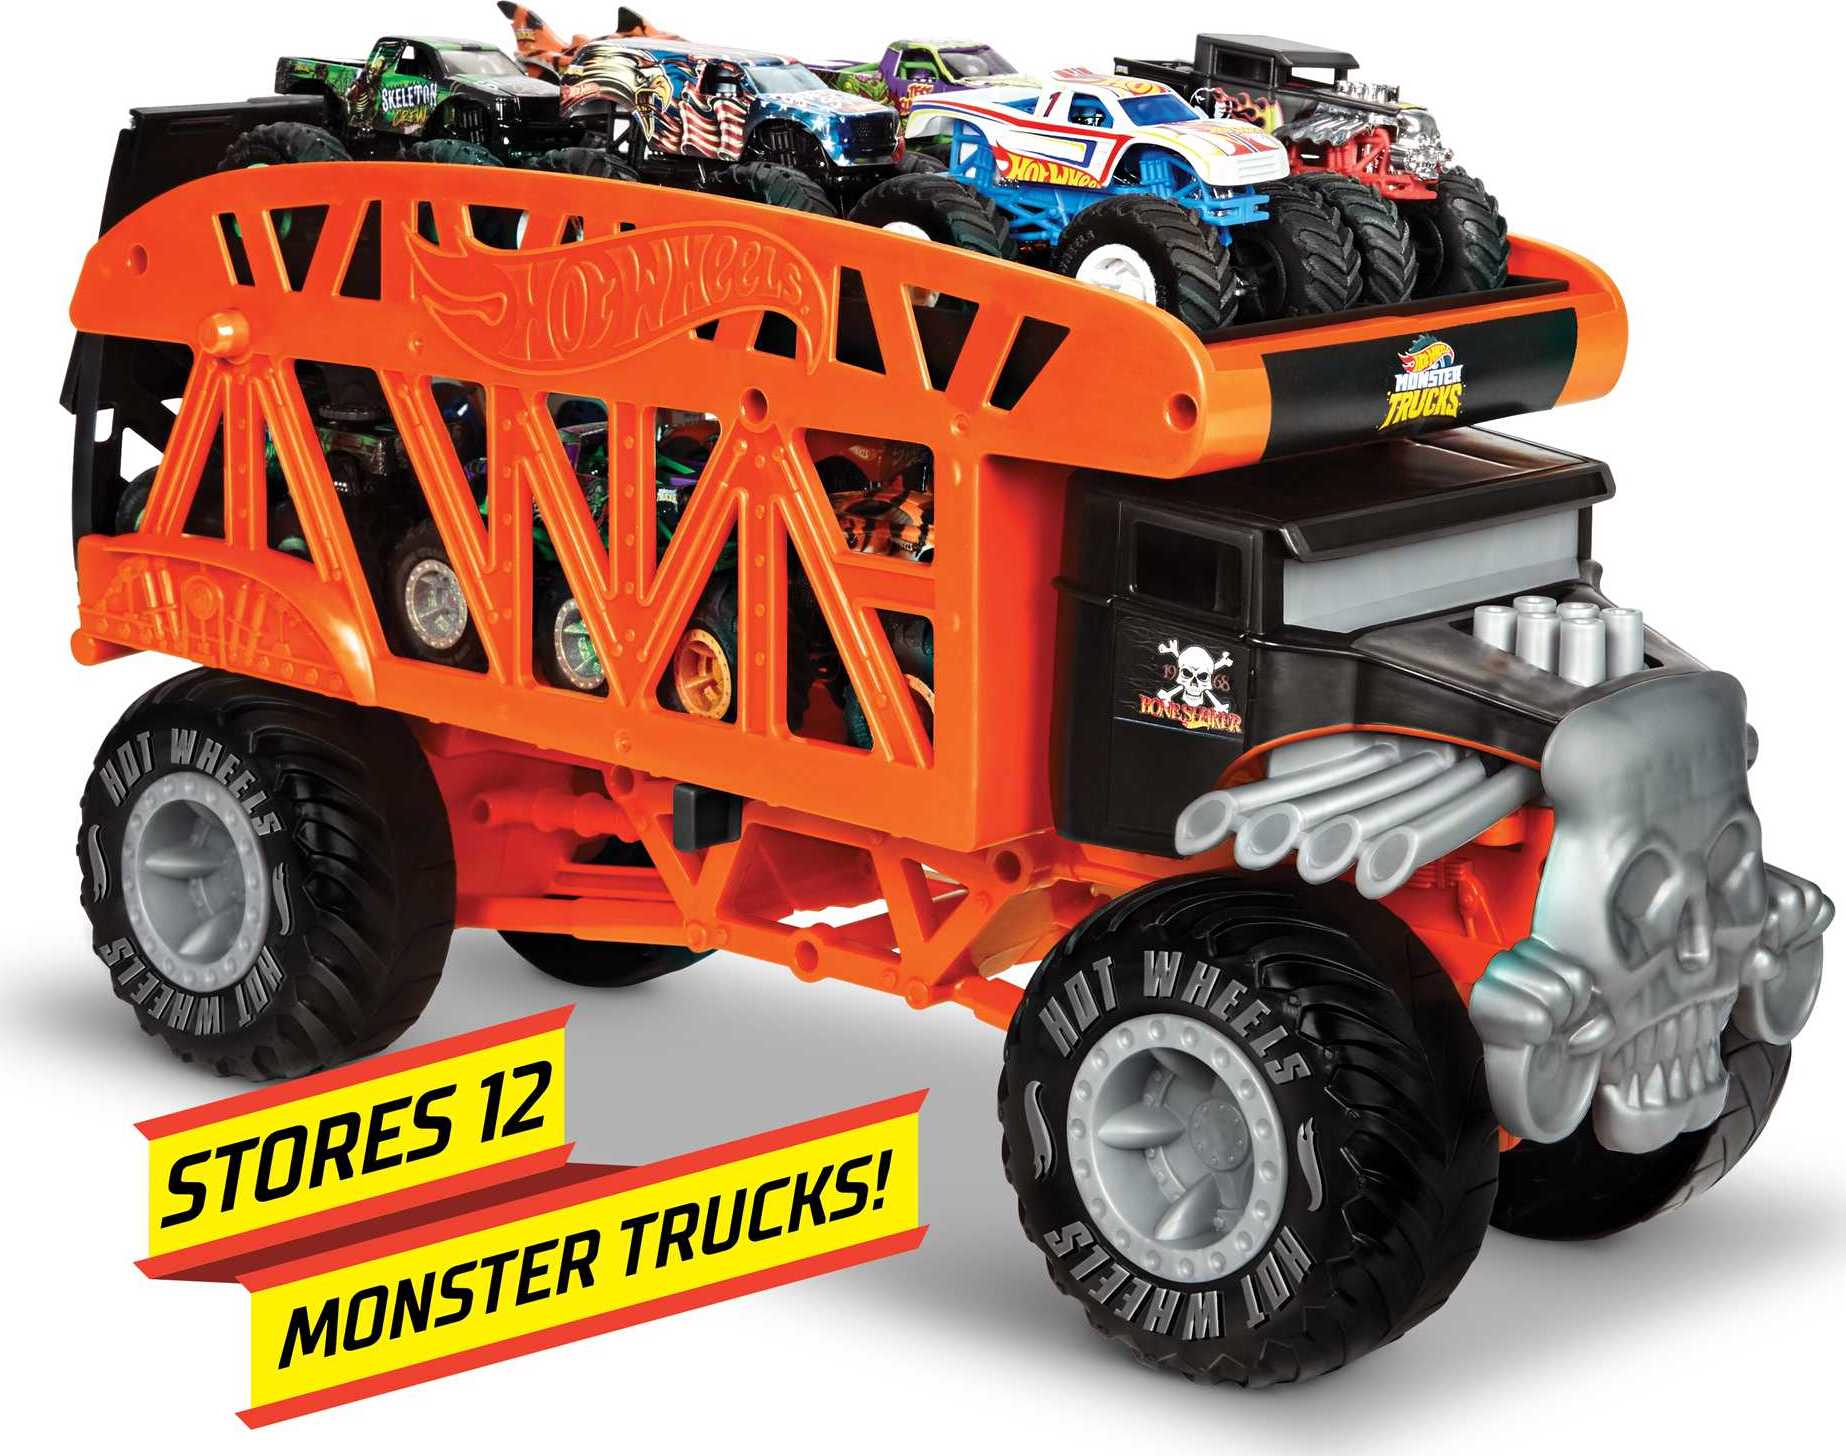 Hot Wheels Monster Trucks Monster Mover, Large-Scale Launcher & Hauler, Stores 12 Toy Trucks - image 4 of 7